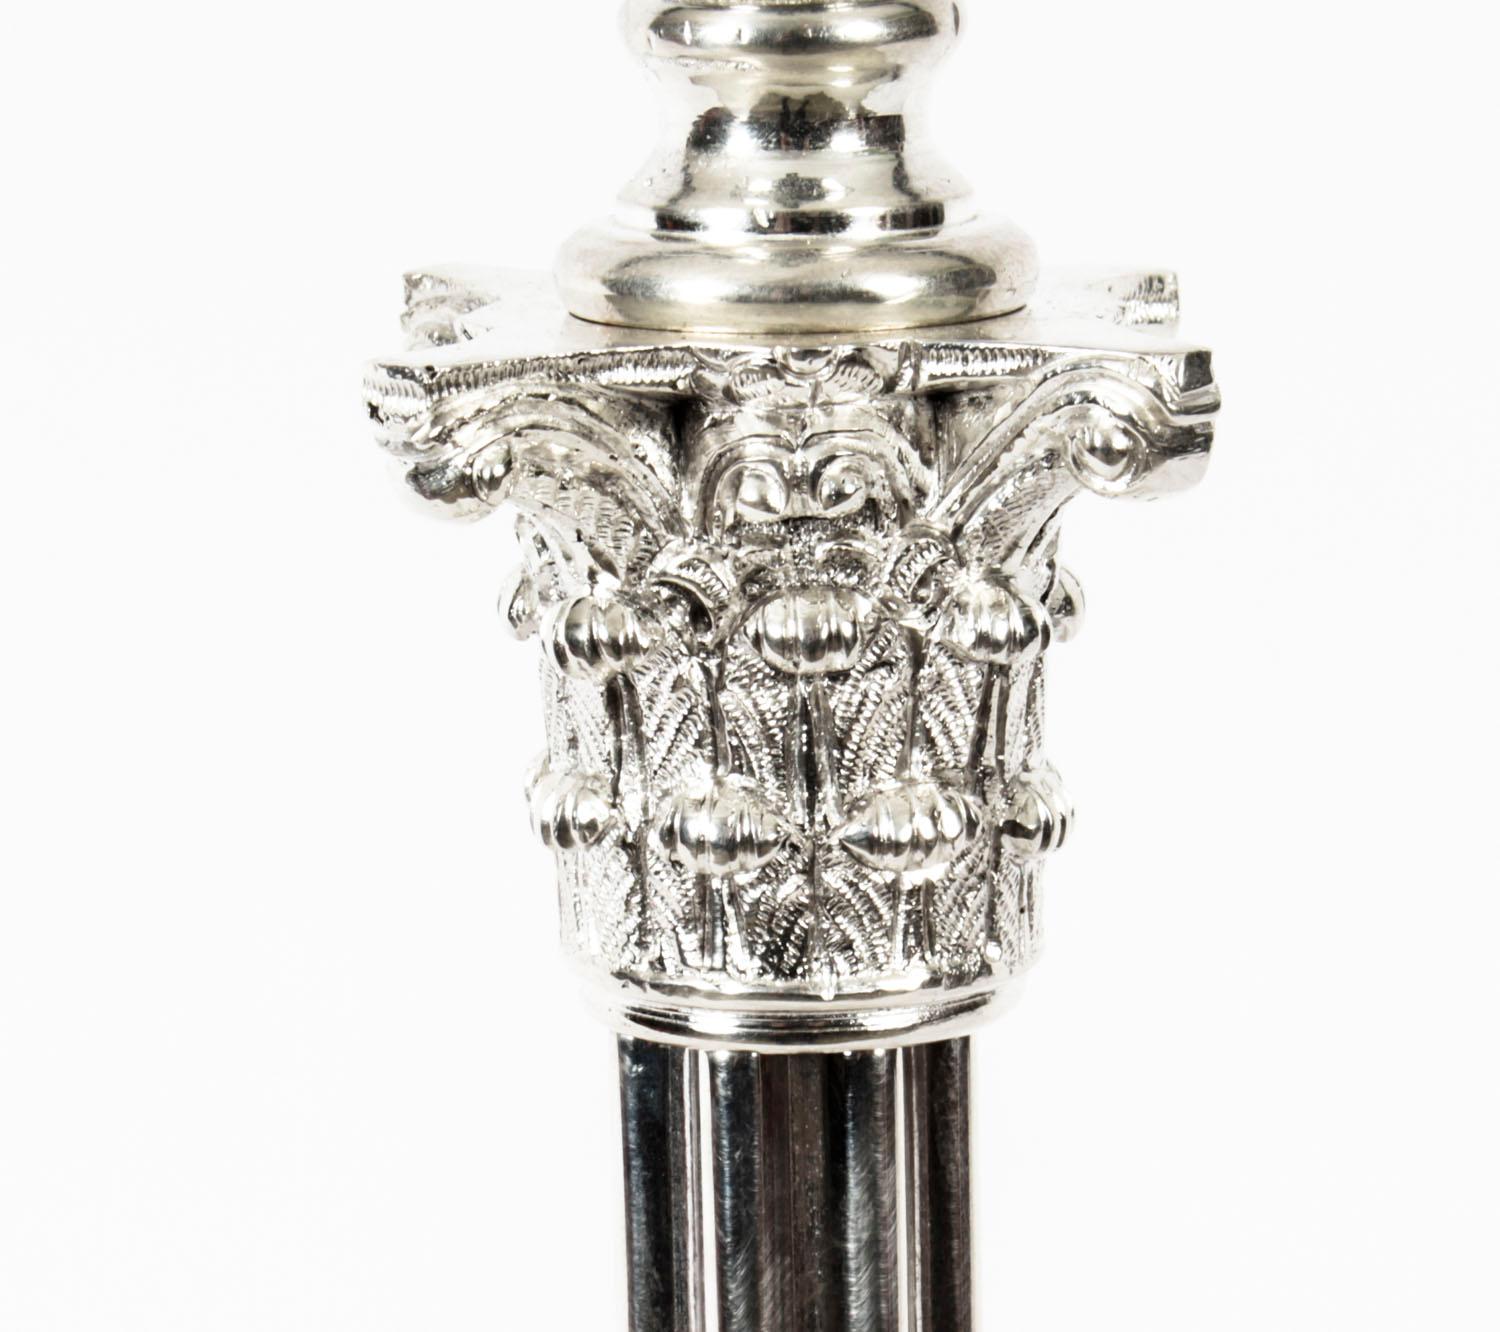 Antigua lámpara de mesa eduardiana de columna corintia chapada en plata, principios del siglo XX Inglés en venta